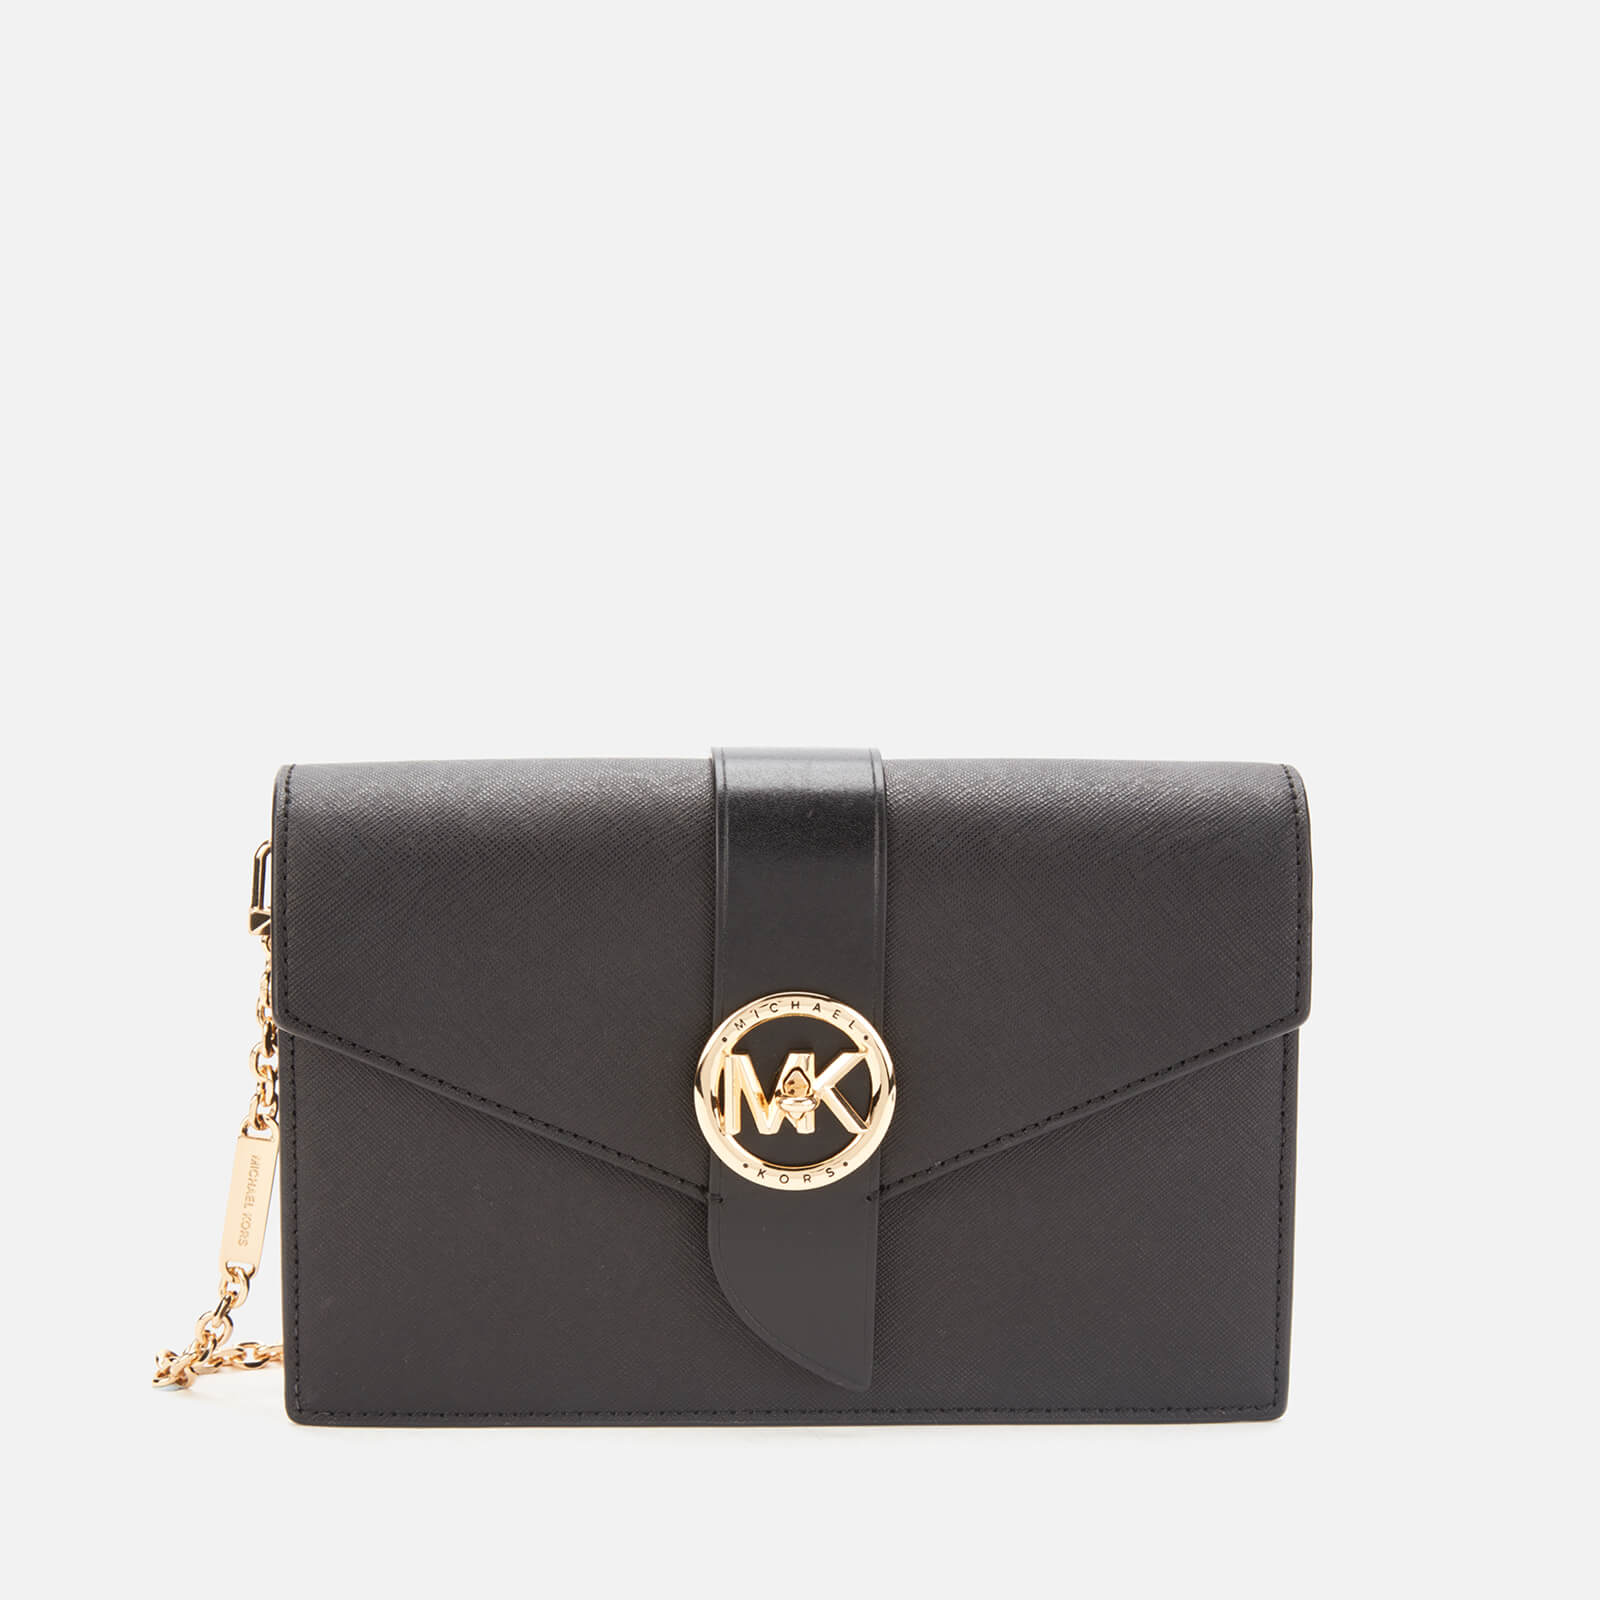 michael kors mk womens wallet handbag